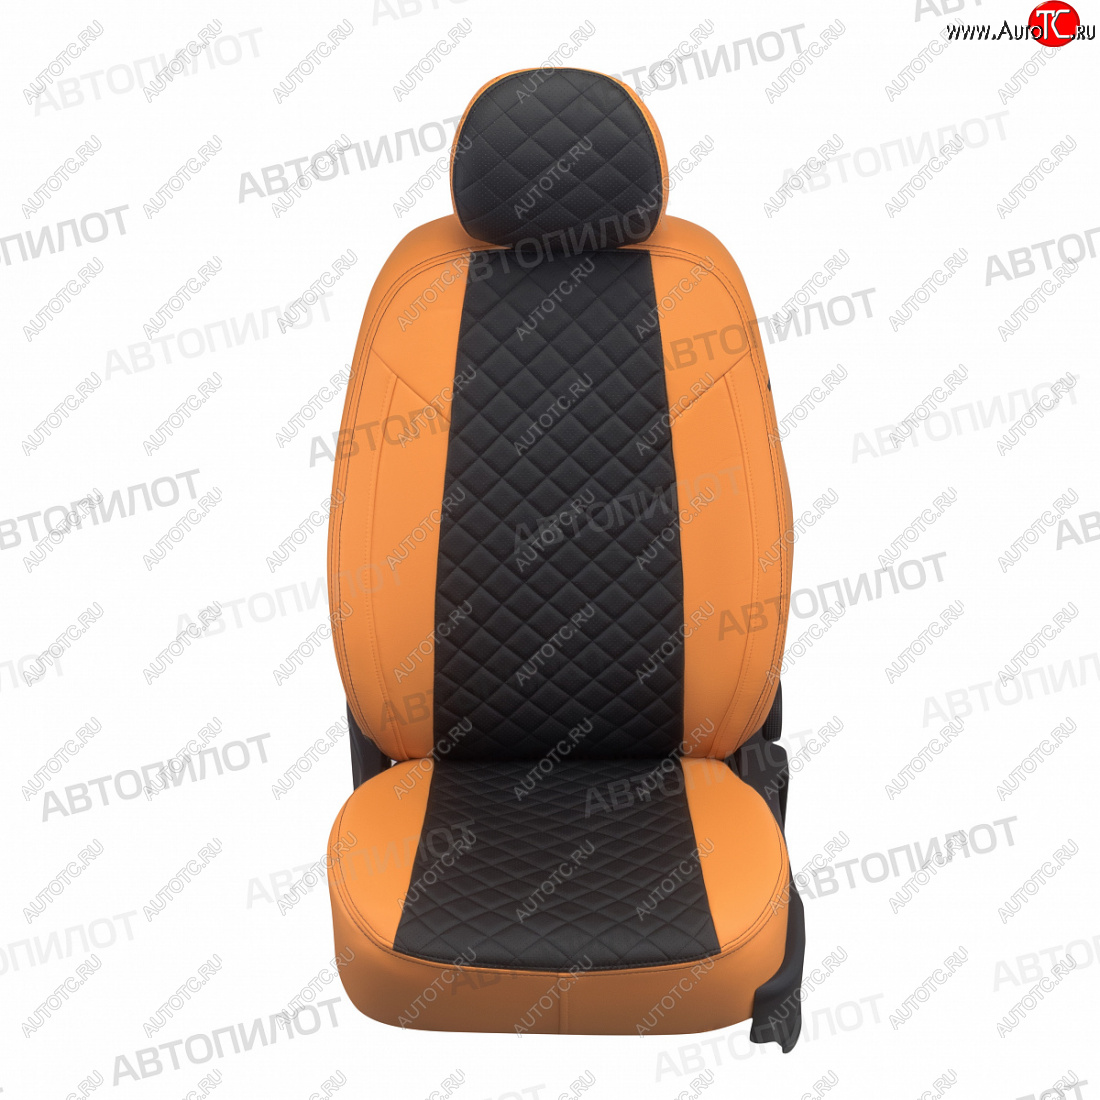 13 999 р. Чехлы сидений (экокожа) Автопилот Ромб  Hyundai Sonata  YF (2009-2014) (оранж/черный)